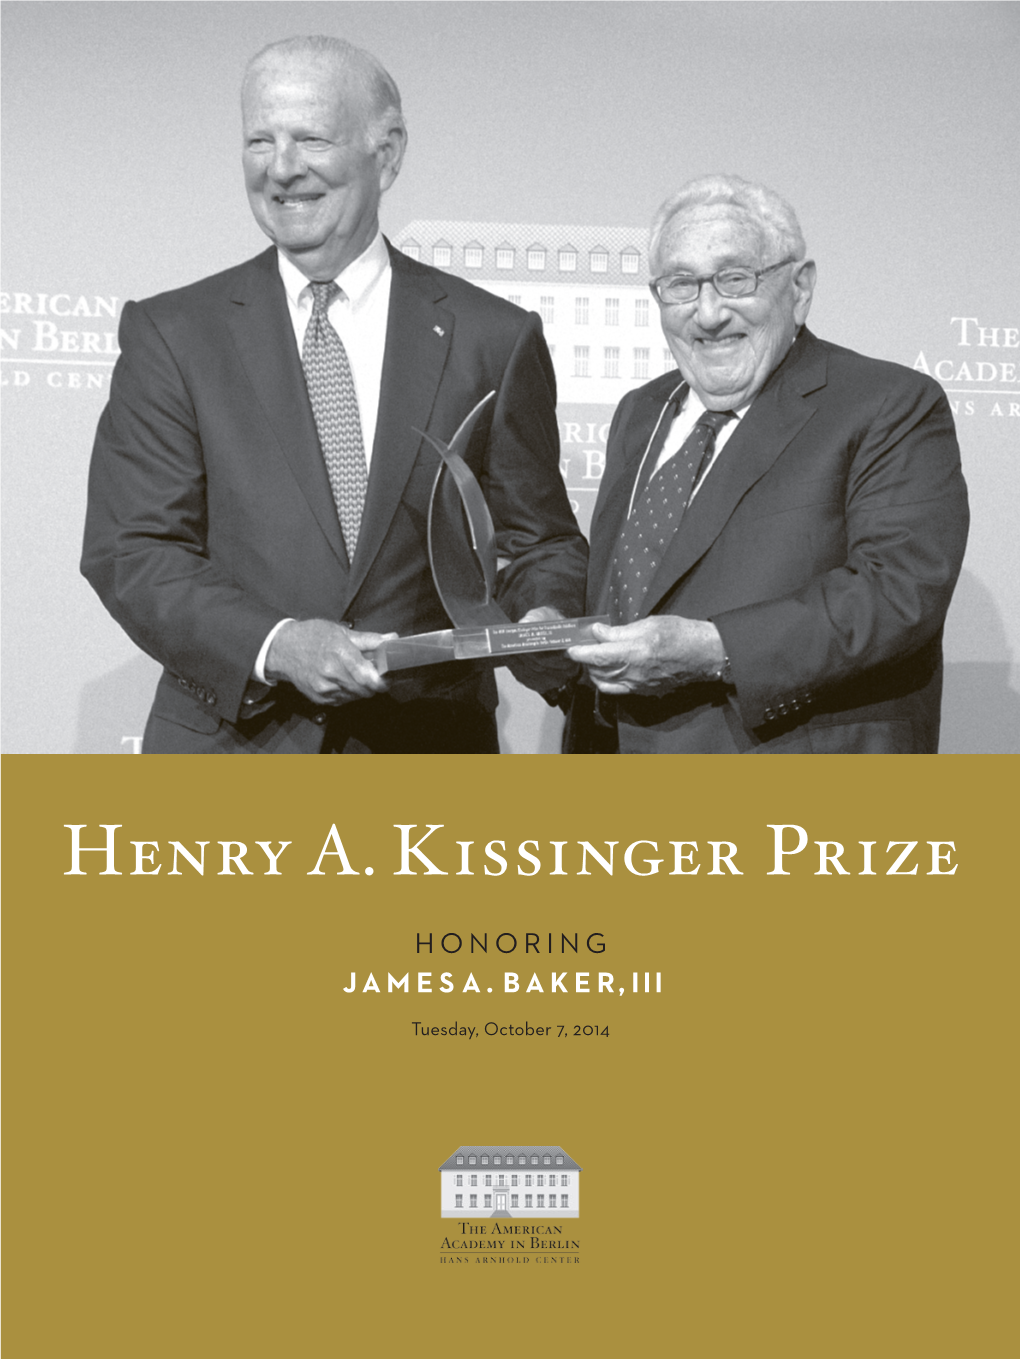 The 2014 Henry A. Kissinger Prize Brochure